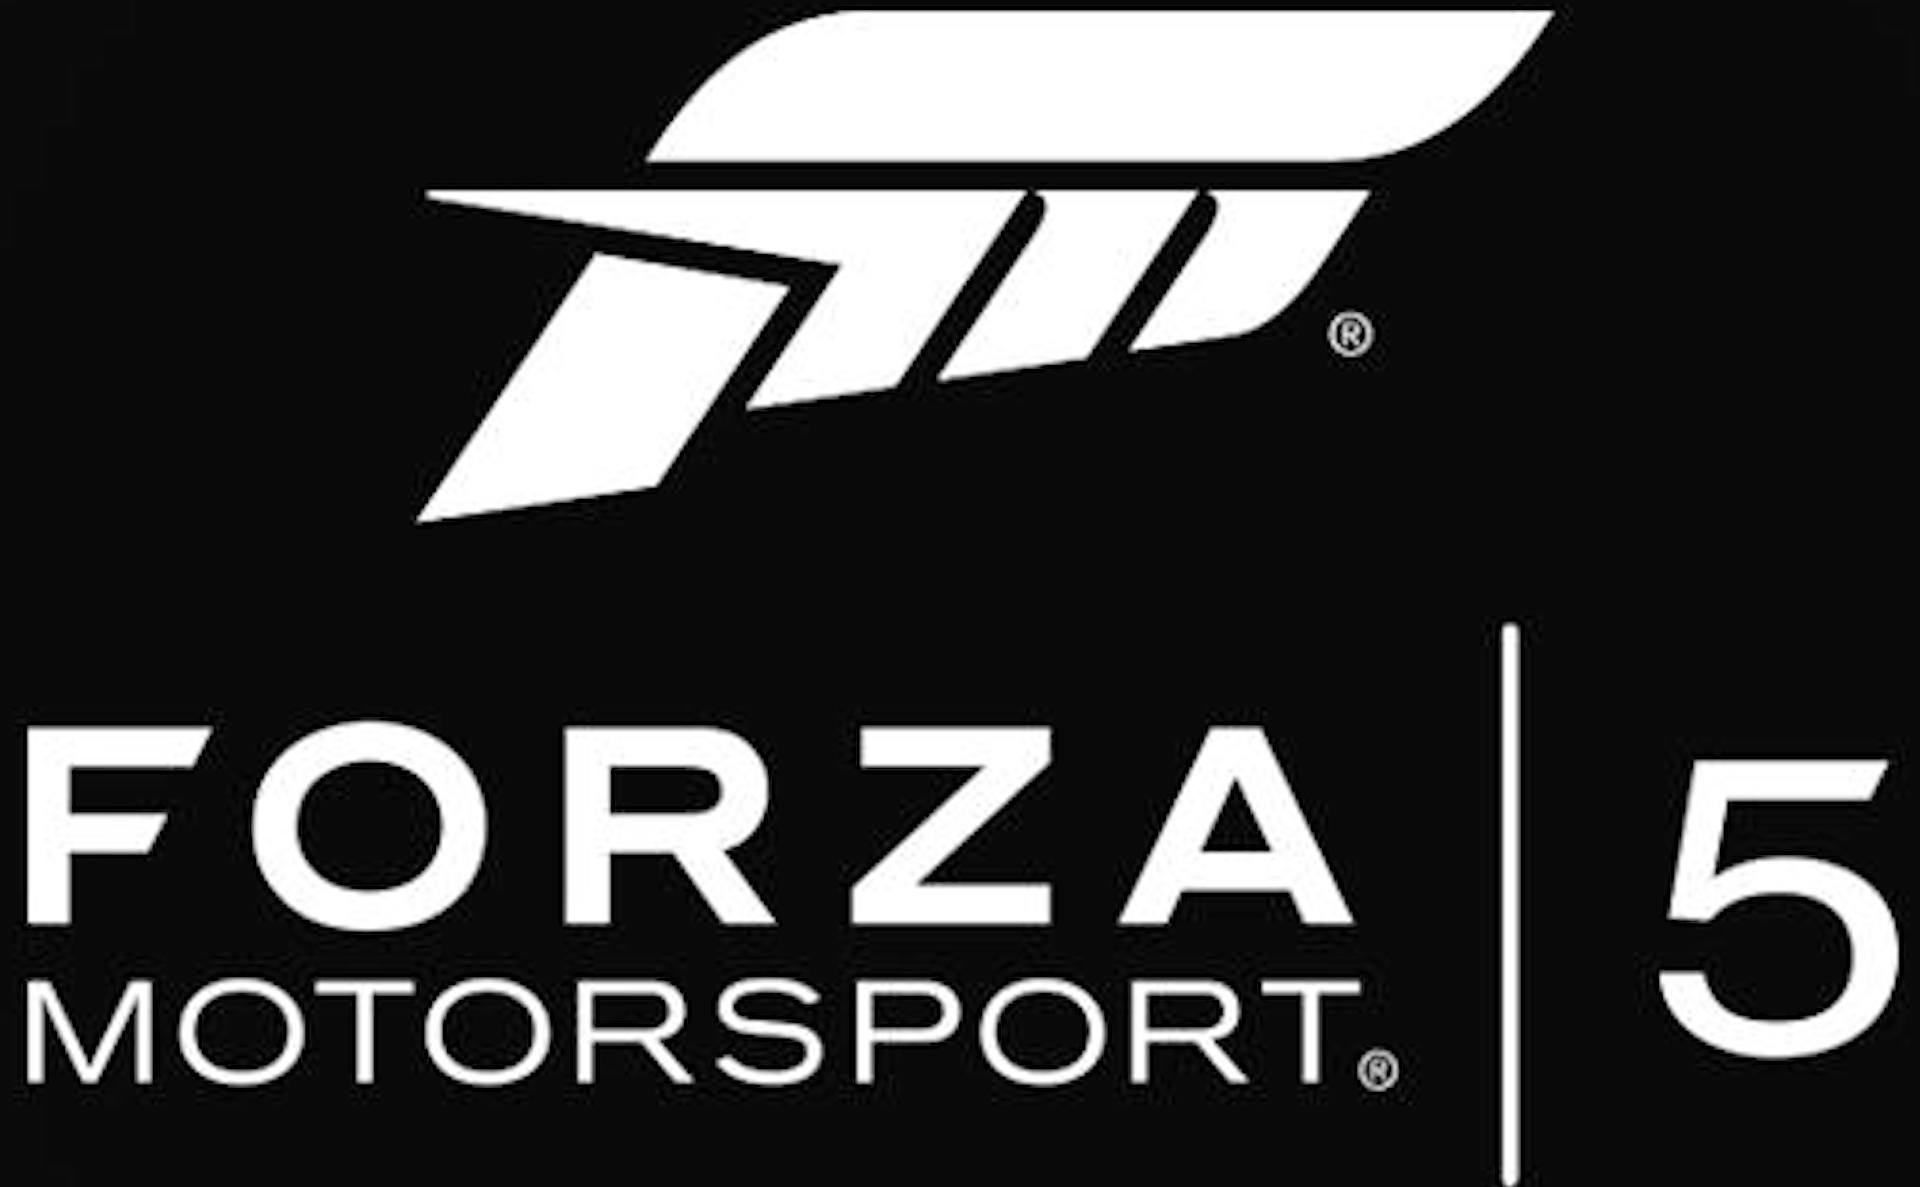 Forza Logo - Forza Motorsport 5 | Logopedia | FANDOM powered by Wikia